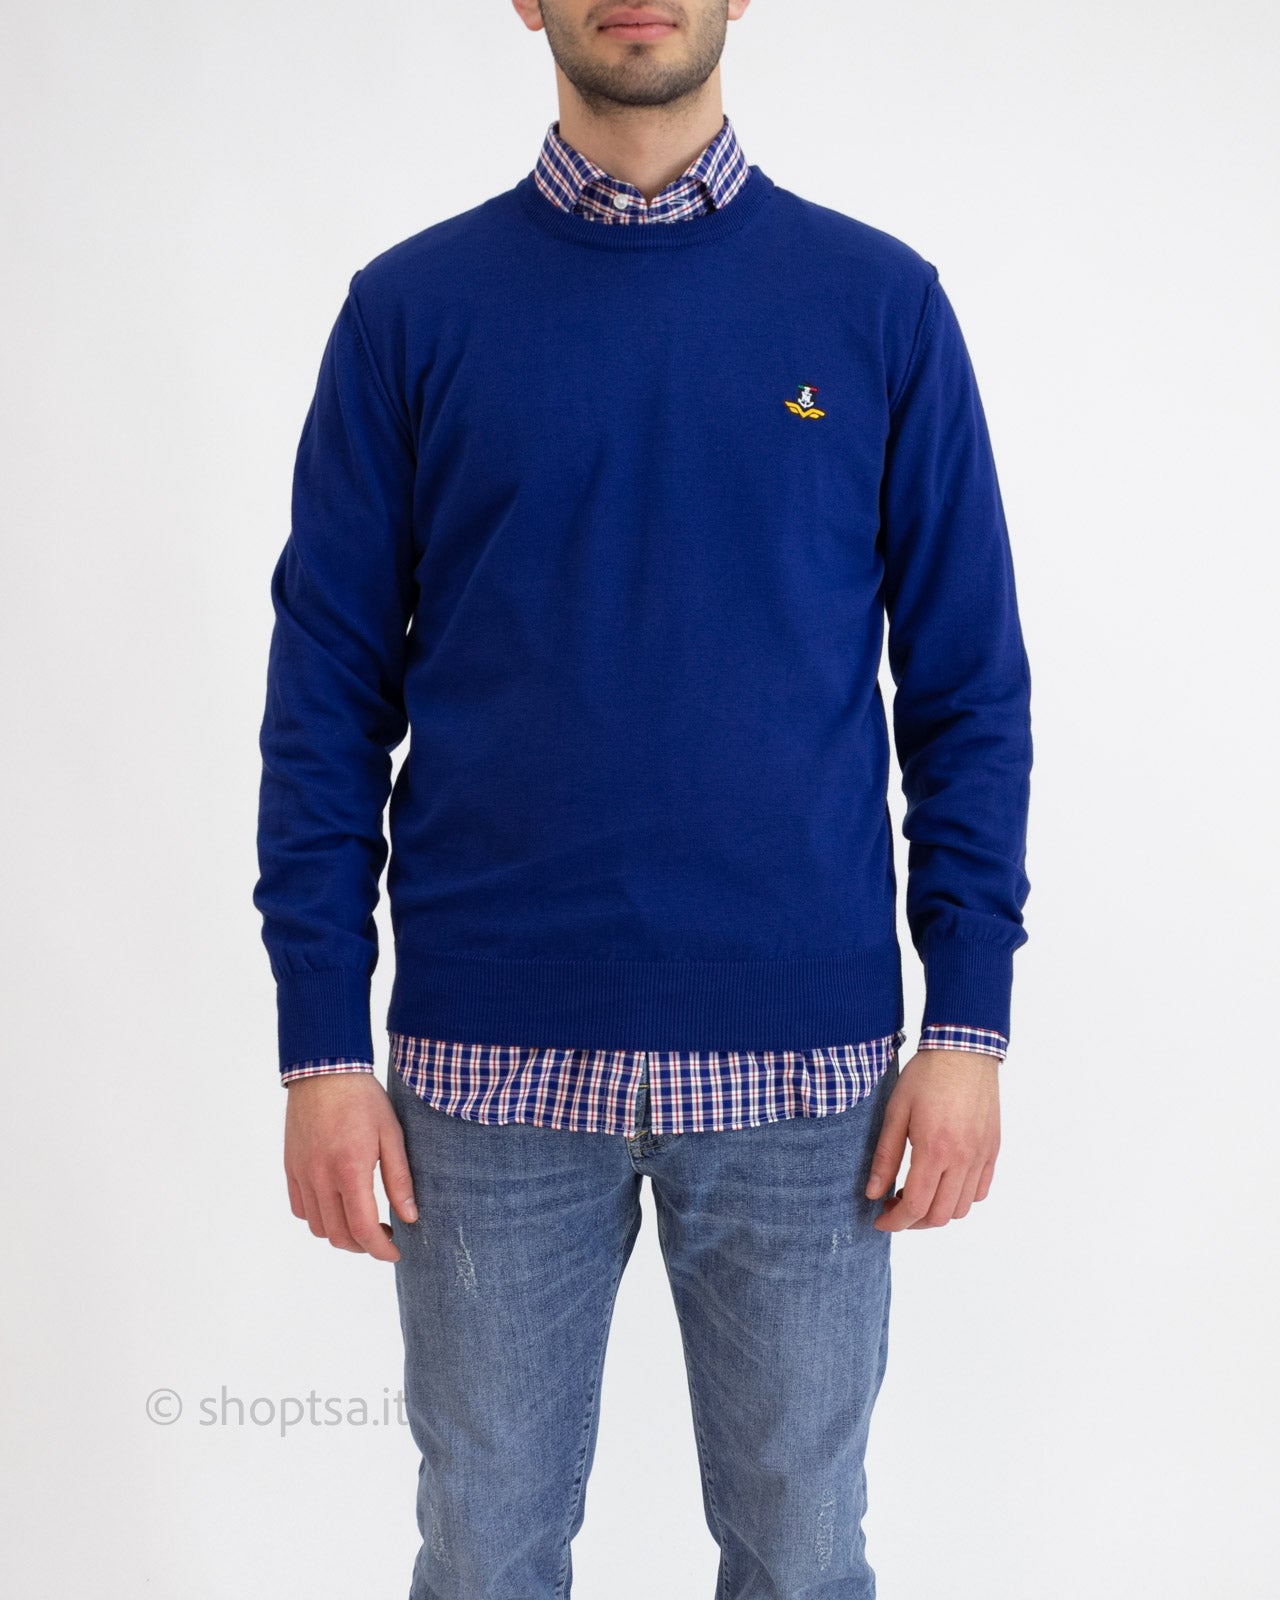 Lightweight cotton crew-neck sweater